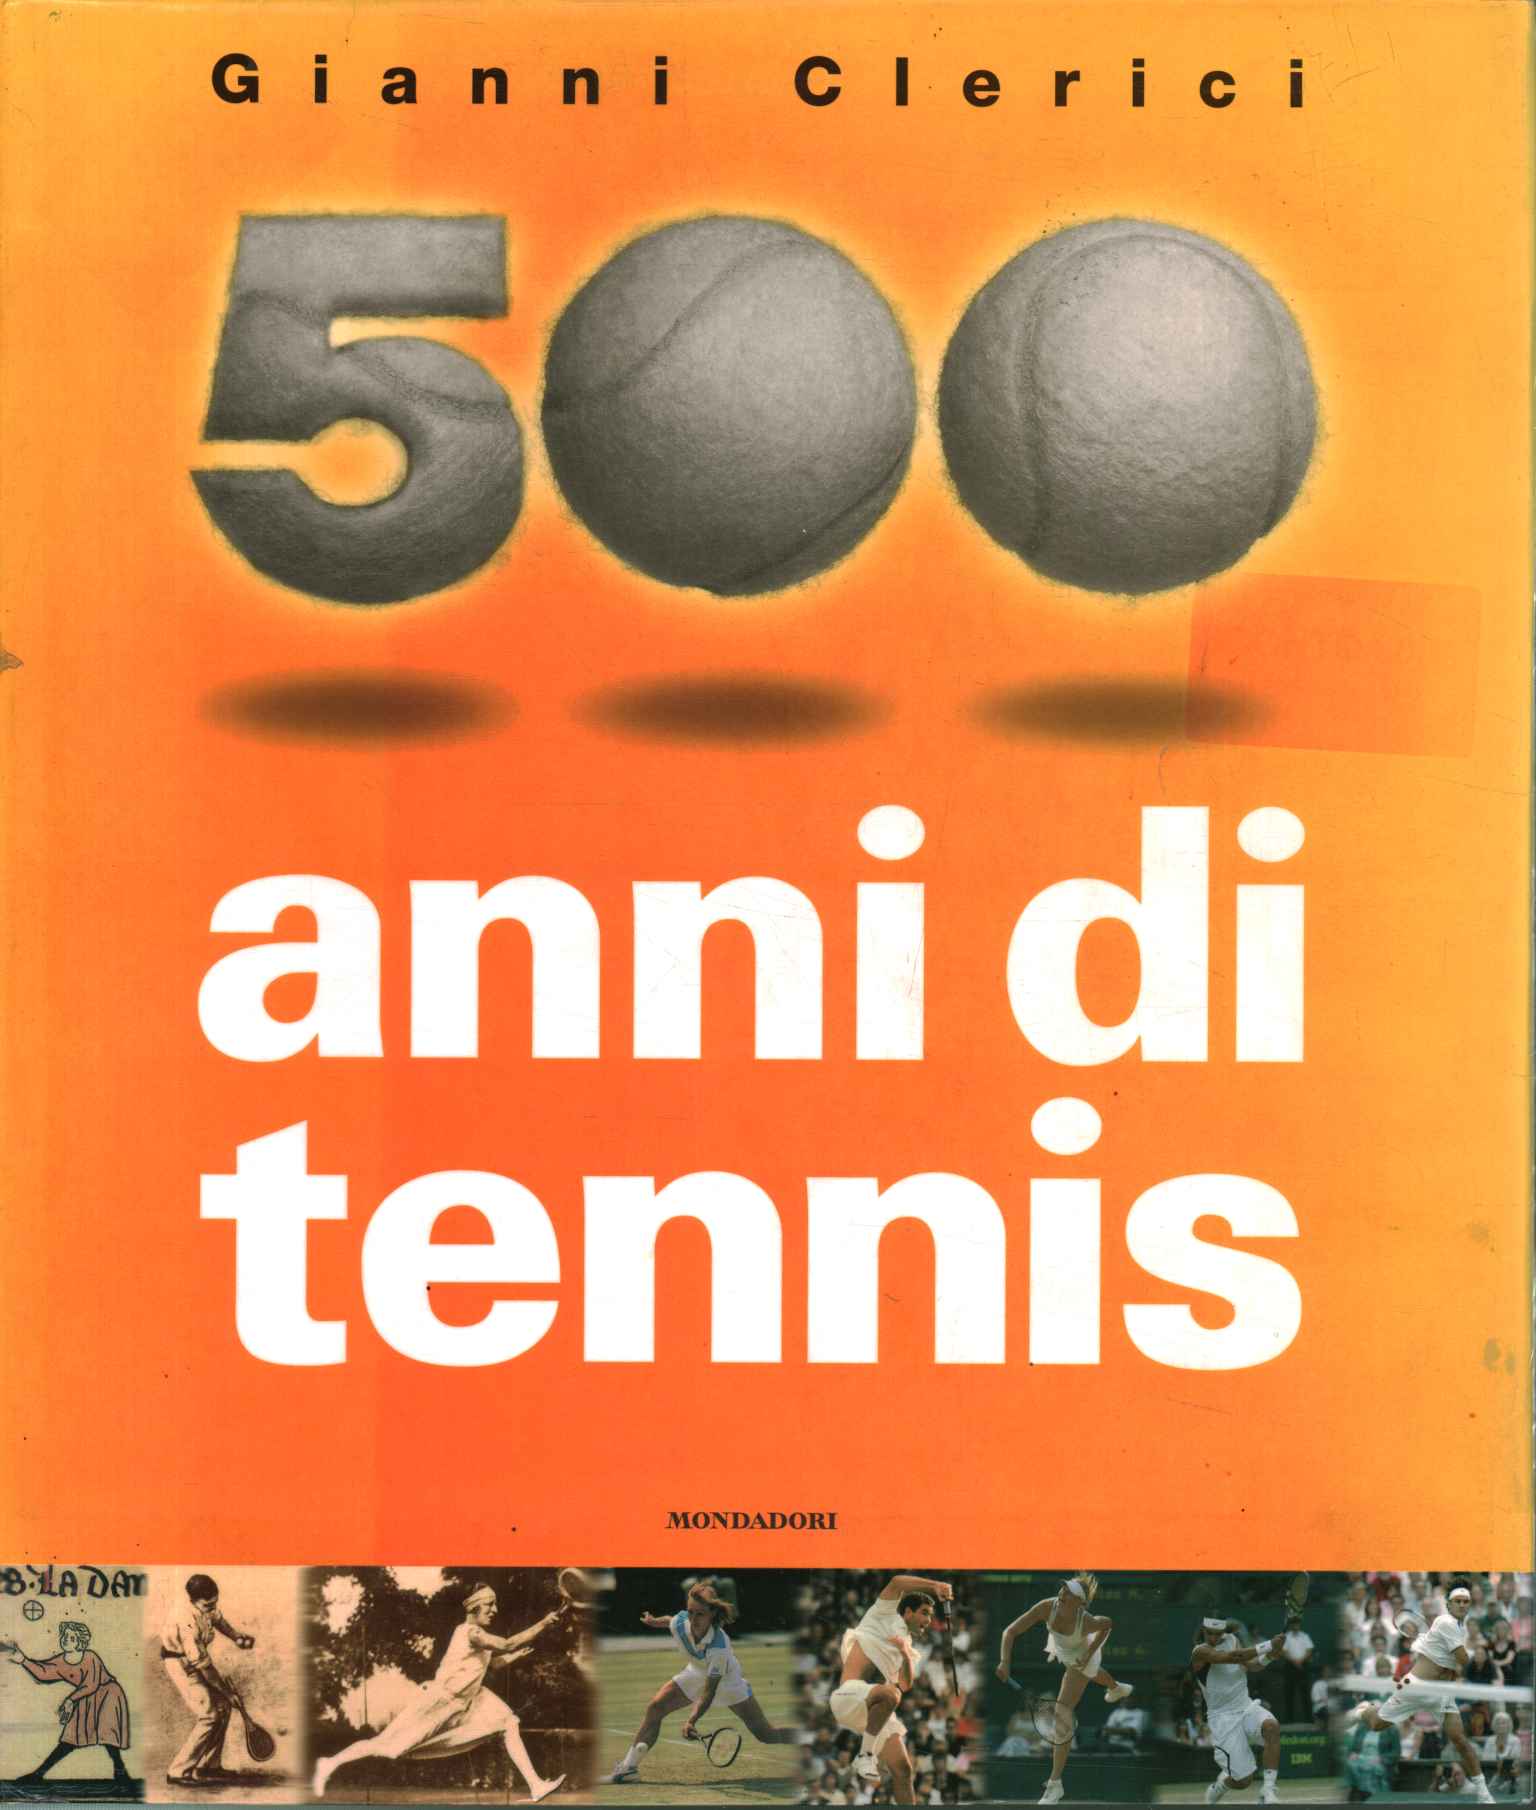 500 Years of Tennis